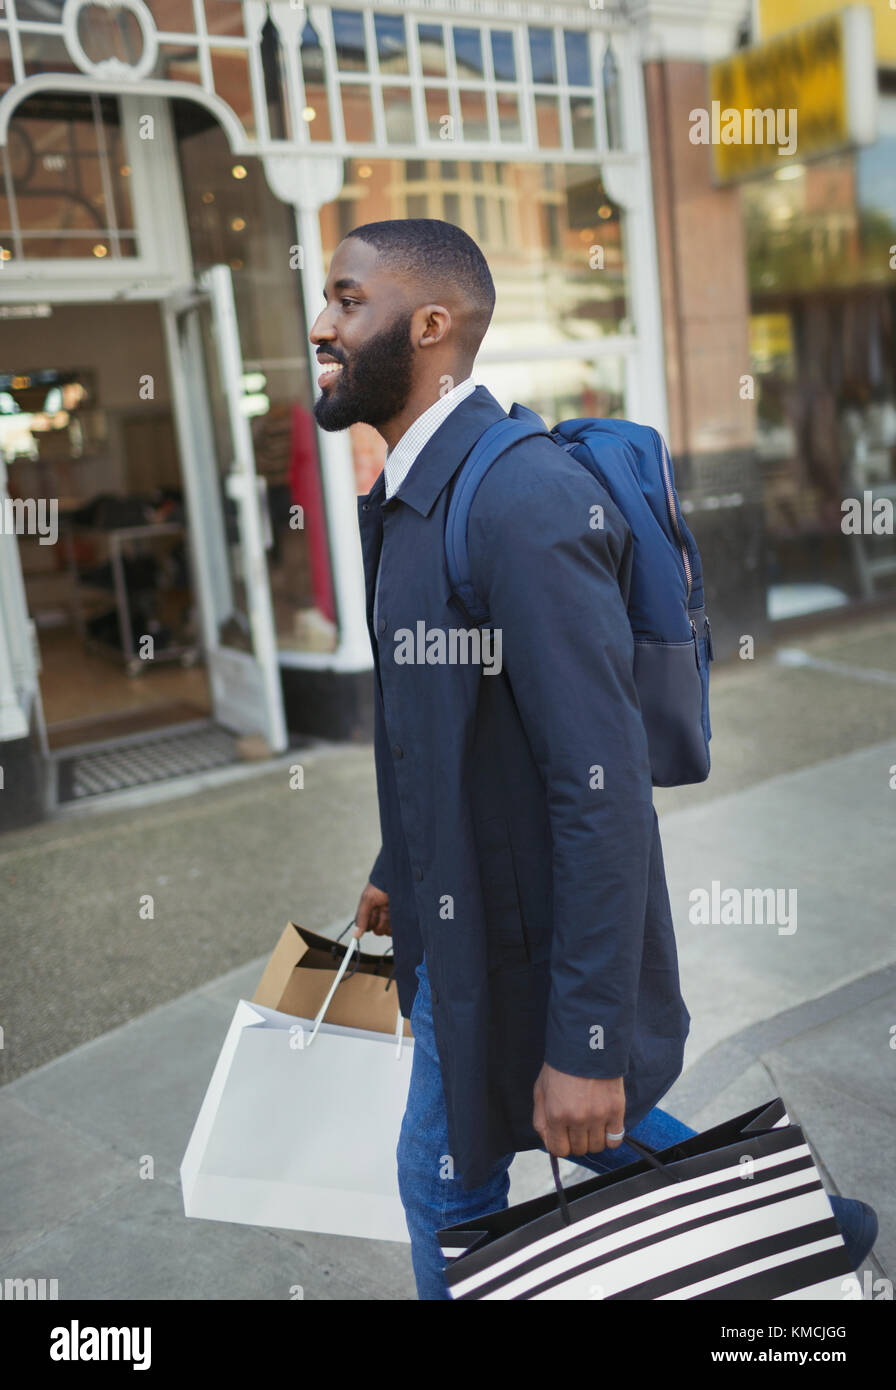 Smiling young man walking along storefront, carrying shopping bags Stock Photo